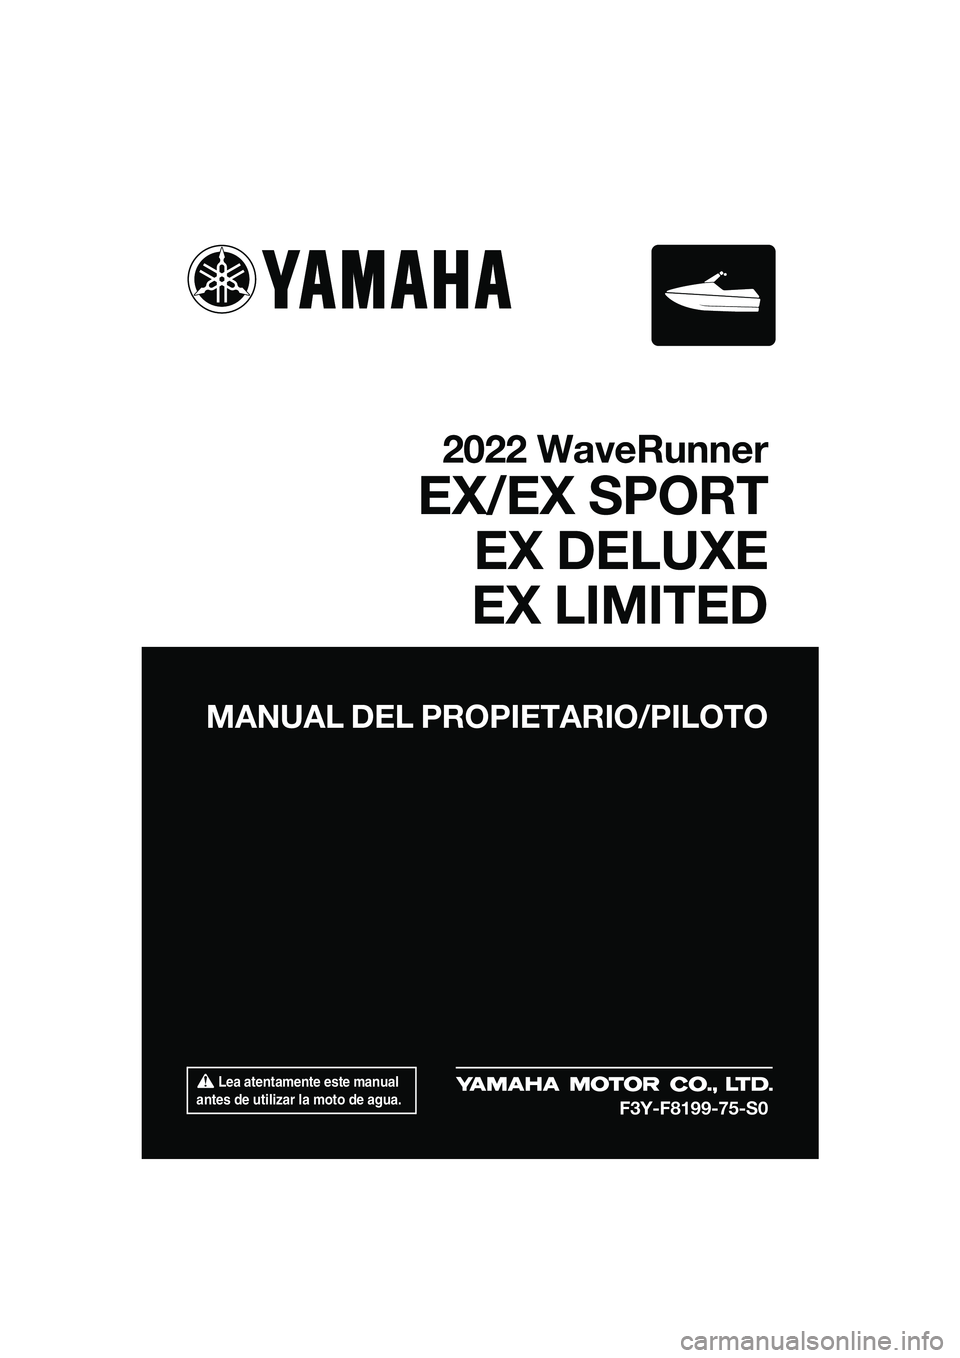 YAMAHA EX LIMITED 2022  Manuale de Empleo (in Spanish) 